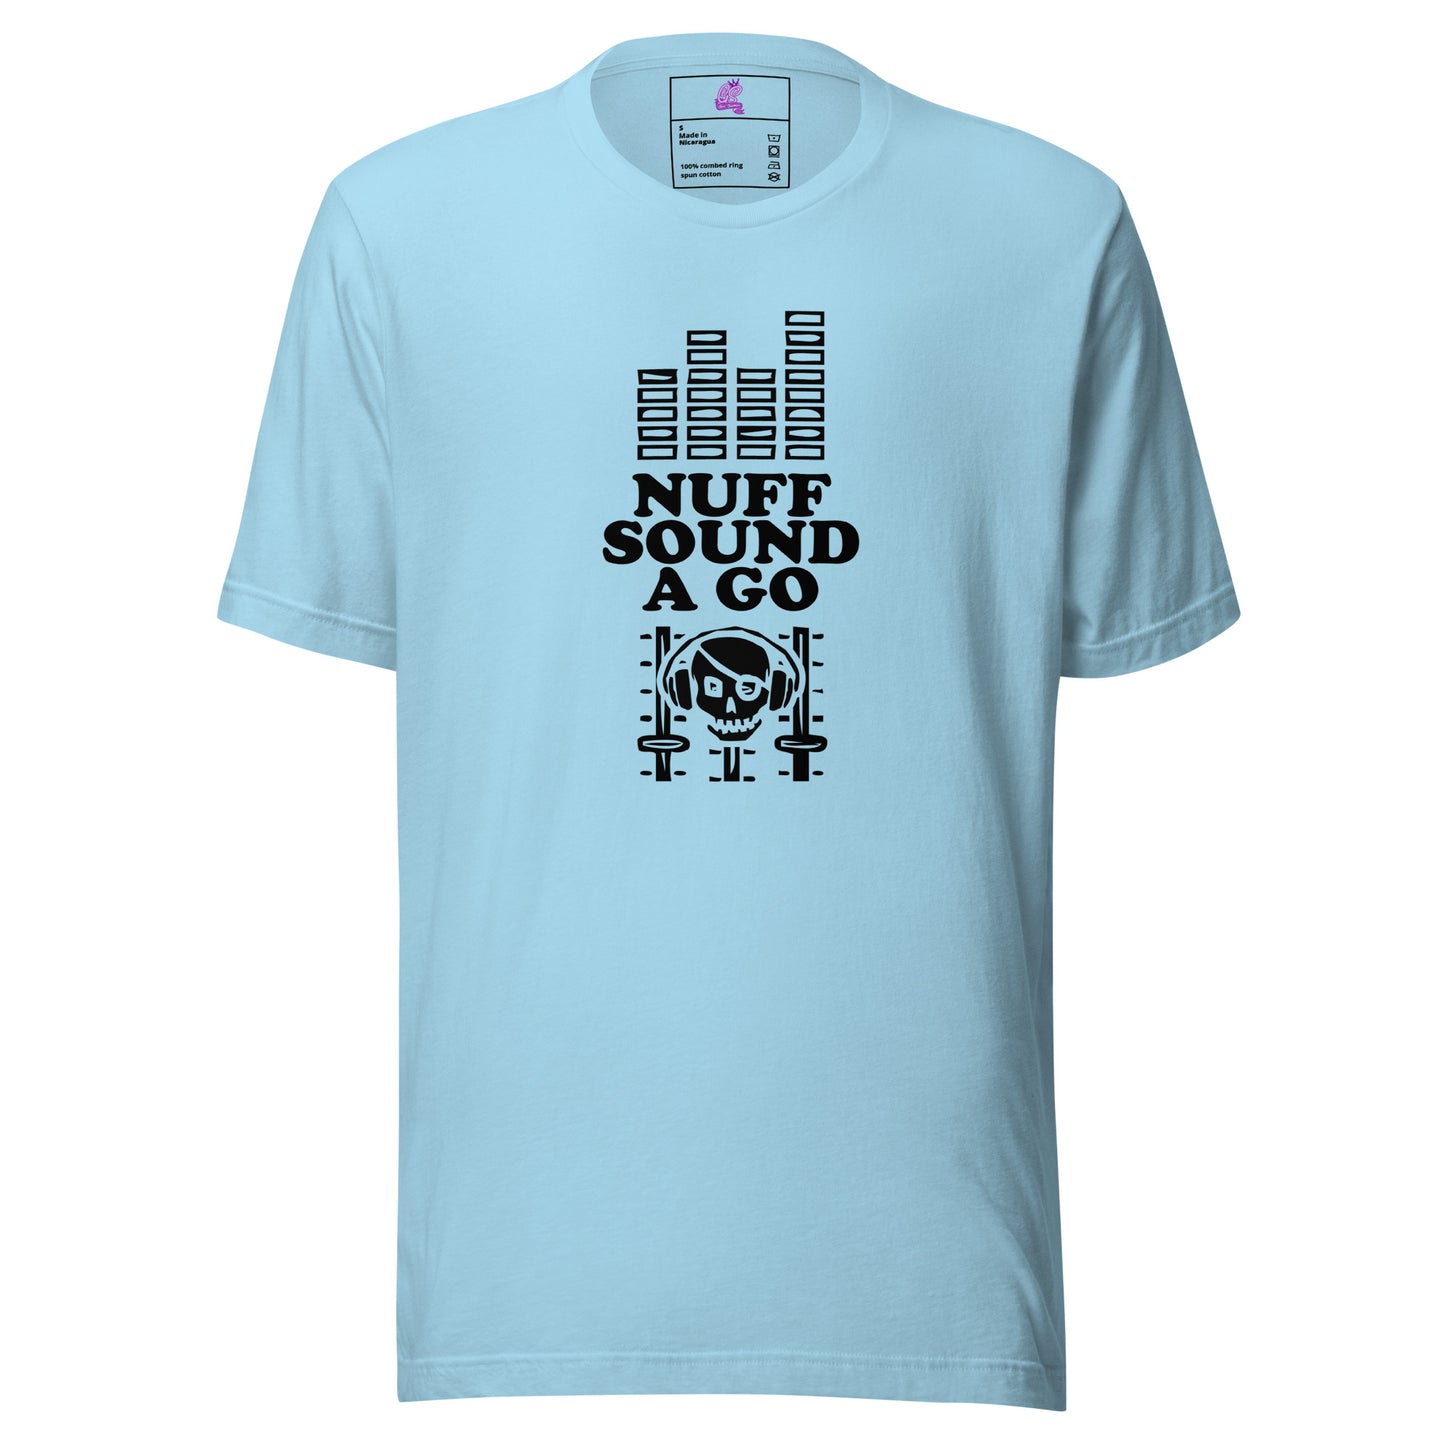 NUFF Sound Ago Dead - Unisex T-shirt (Light)